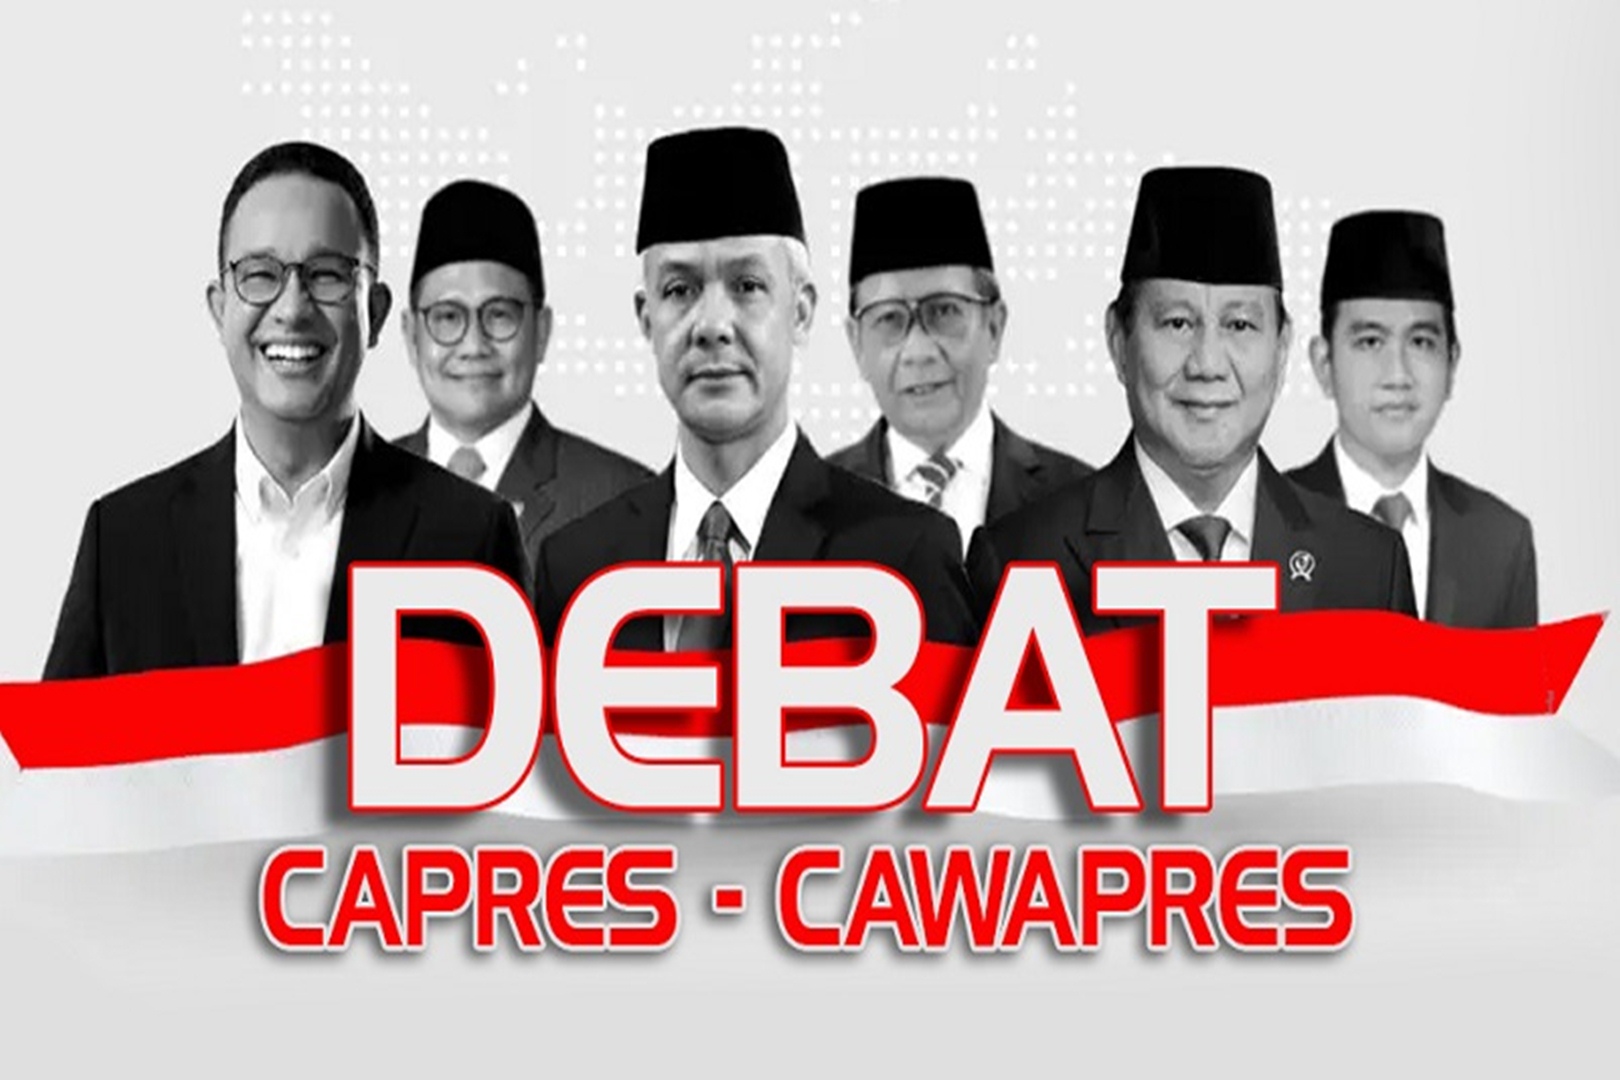 11 Panelis Debat Capres Putaran Pertama Diumumkan KPU, Ada Pakar dan Guru Besar, Berikut Daftarnya